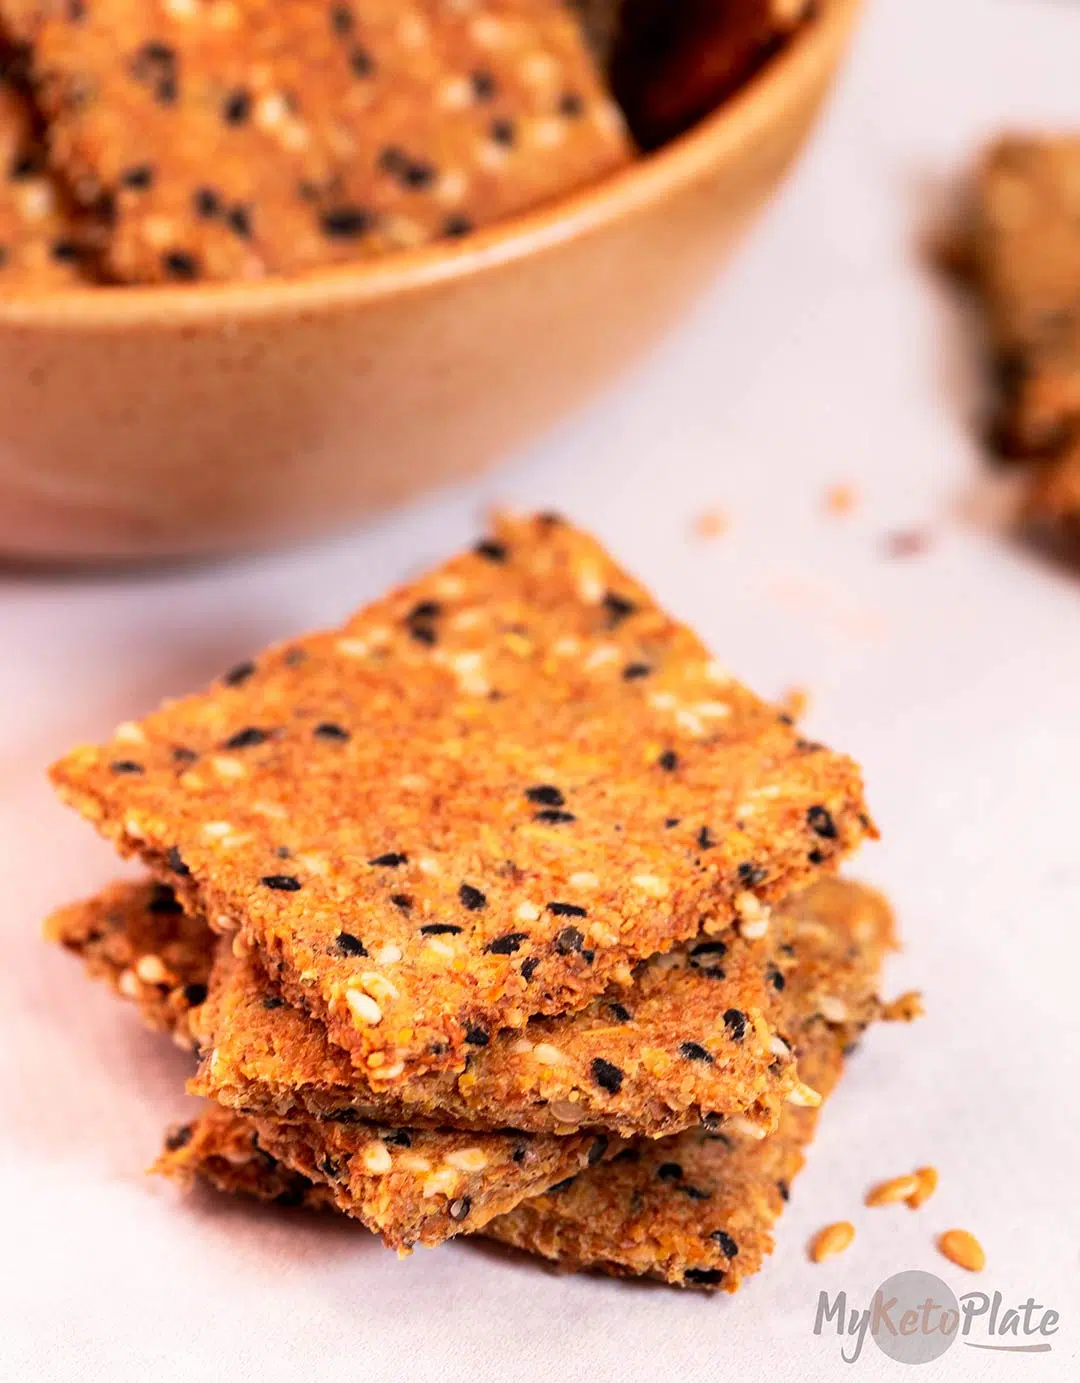 easy flaxseed crackers